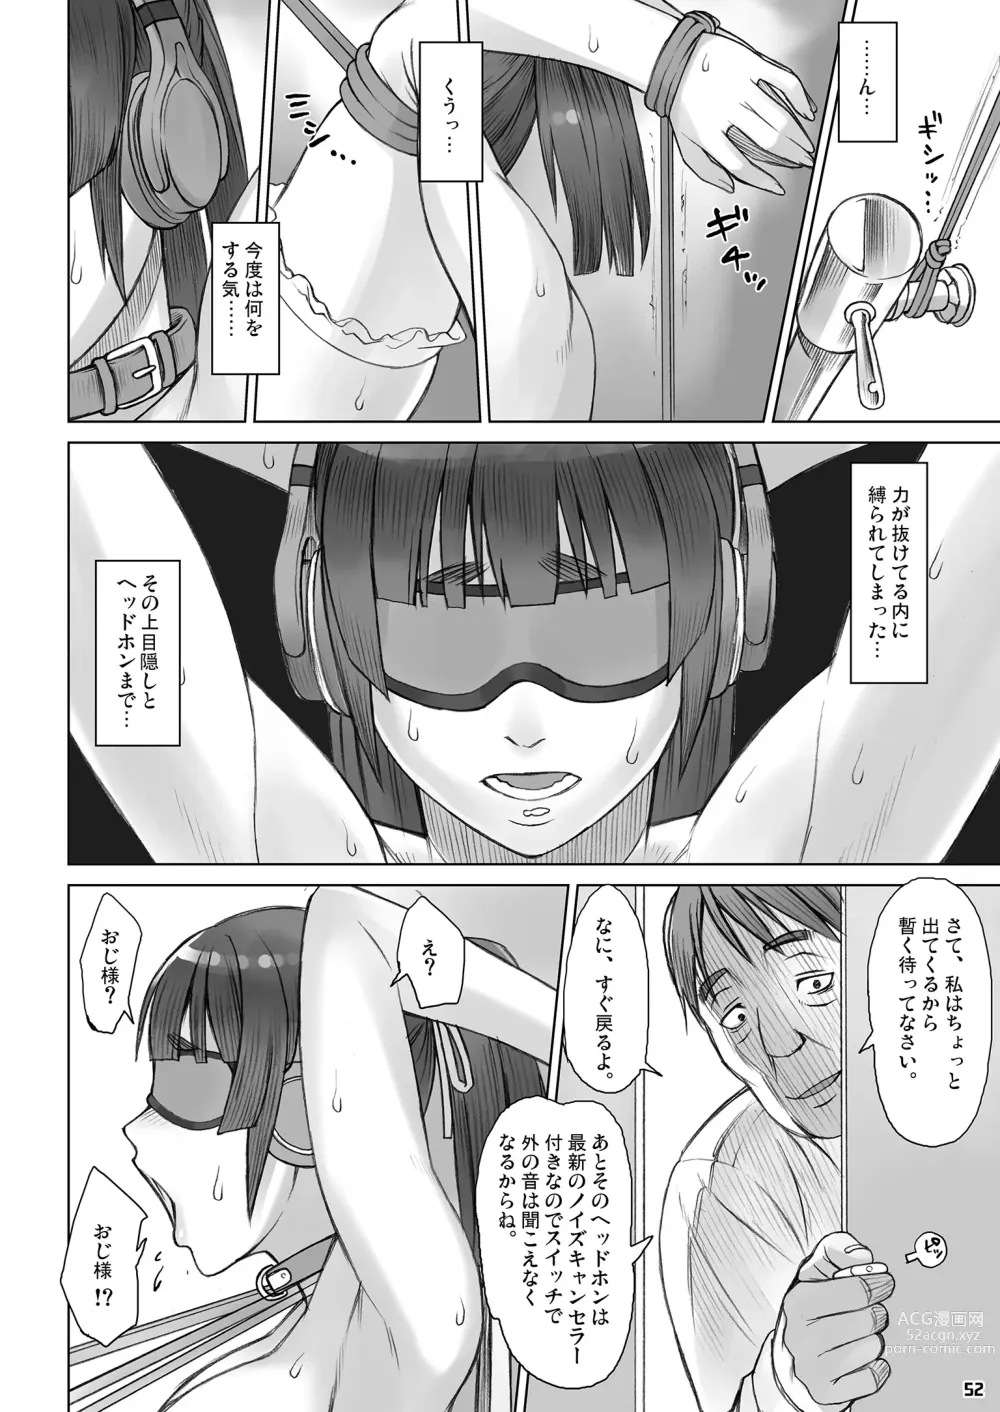 Page 51 of doujinshi Senpai Dakkan Complete+